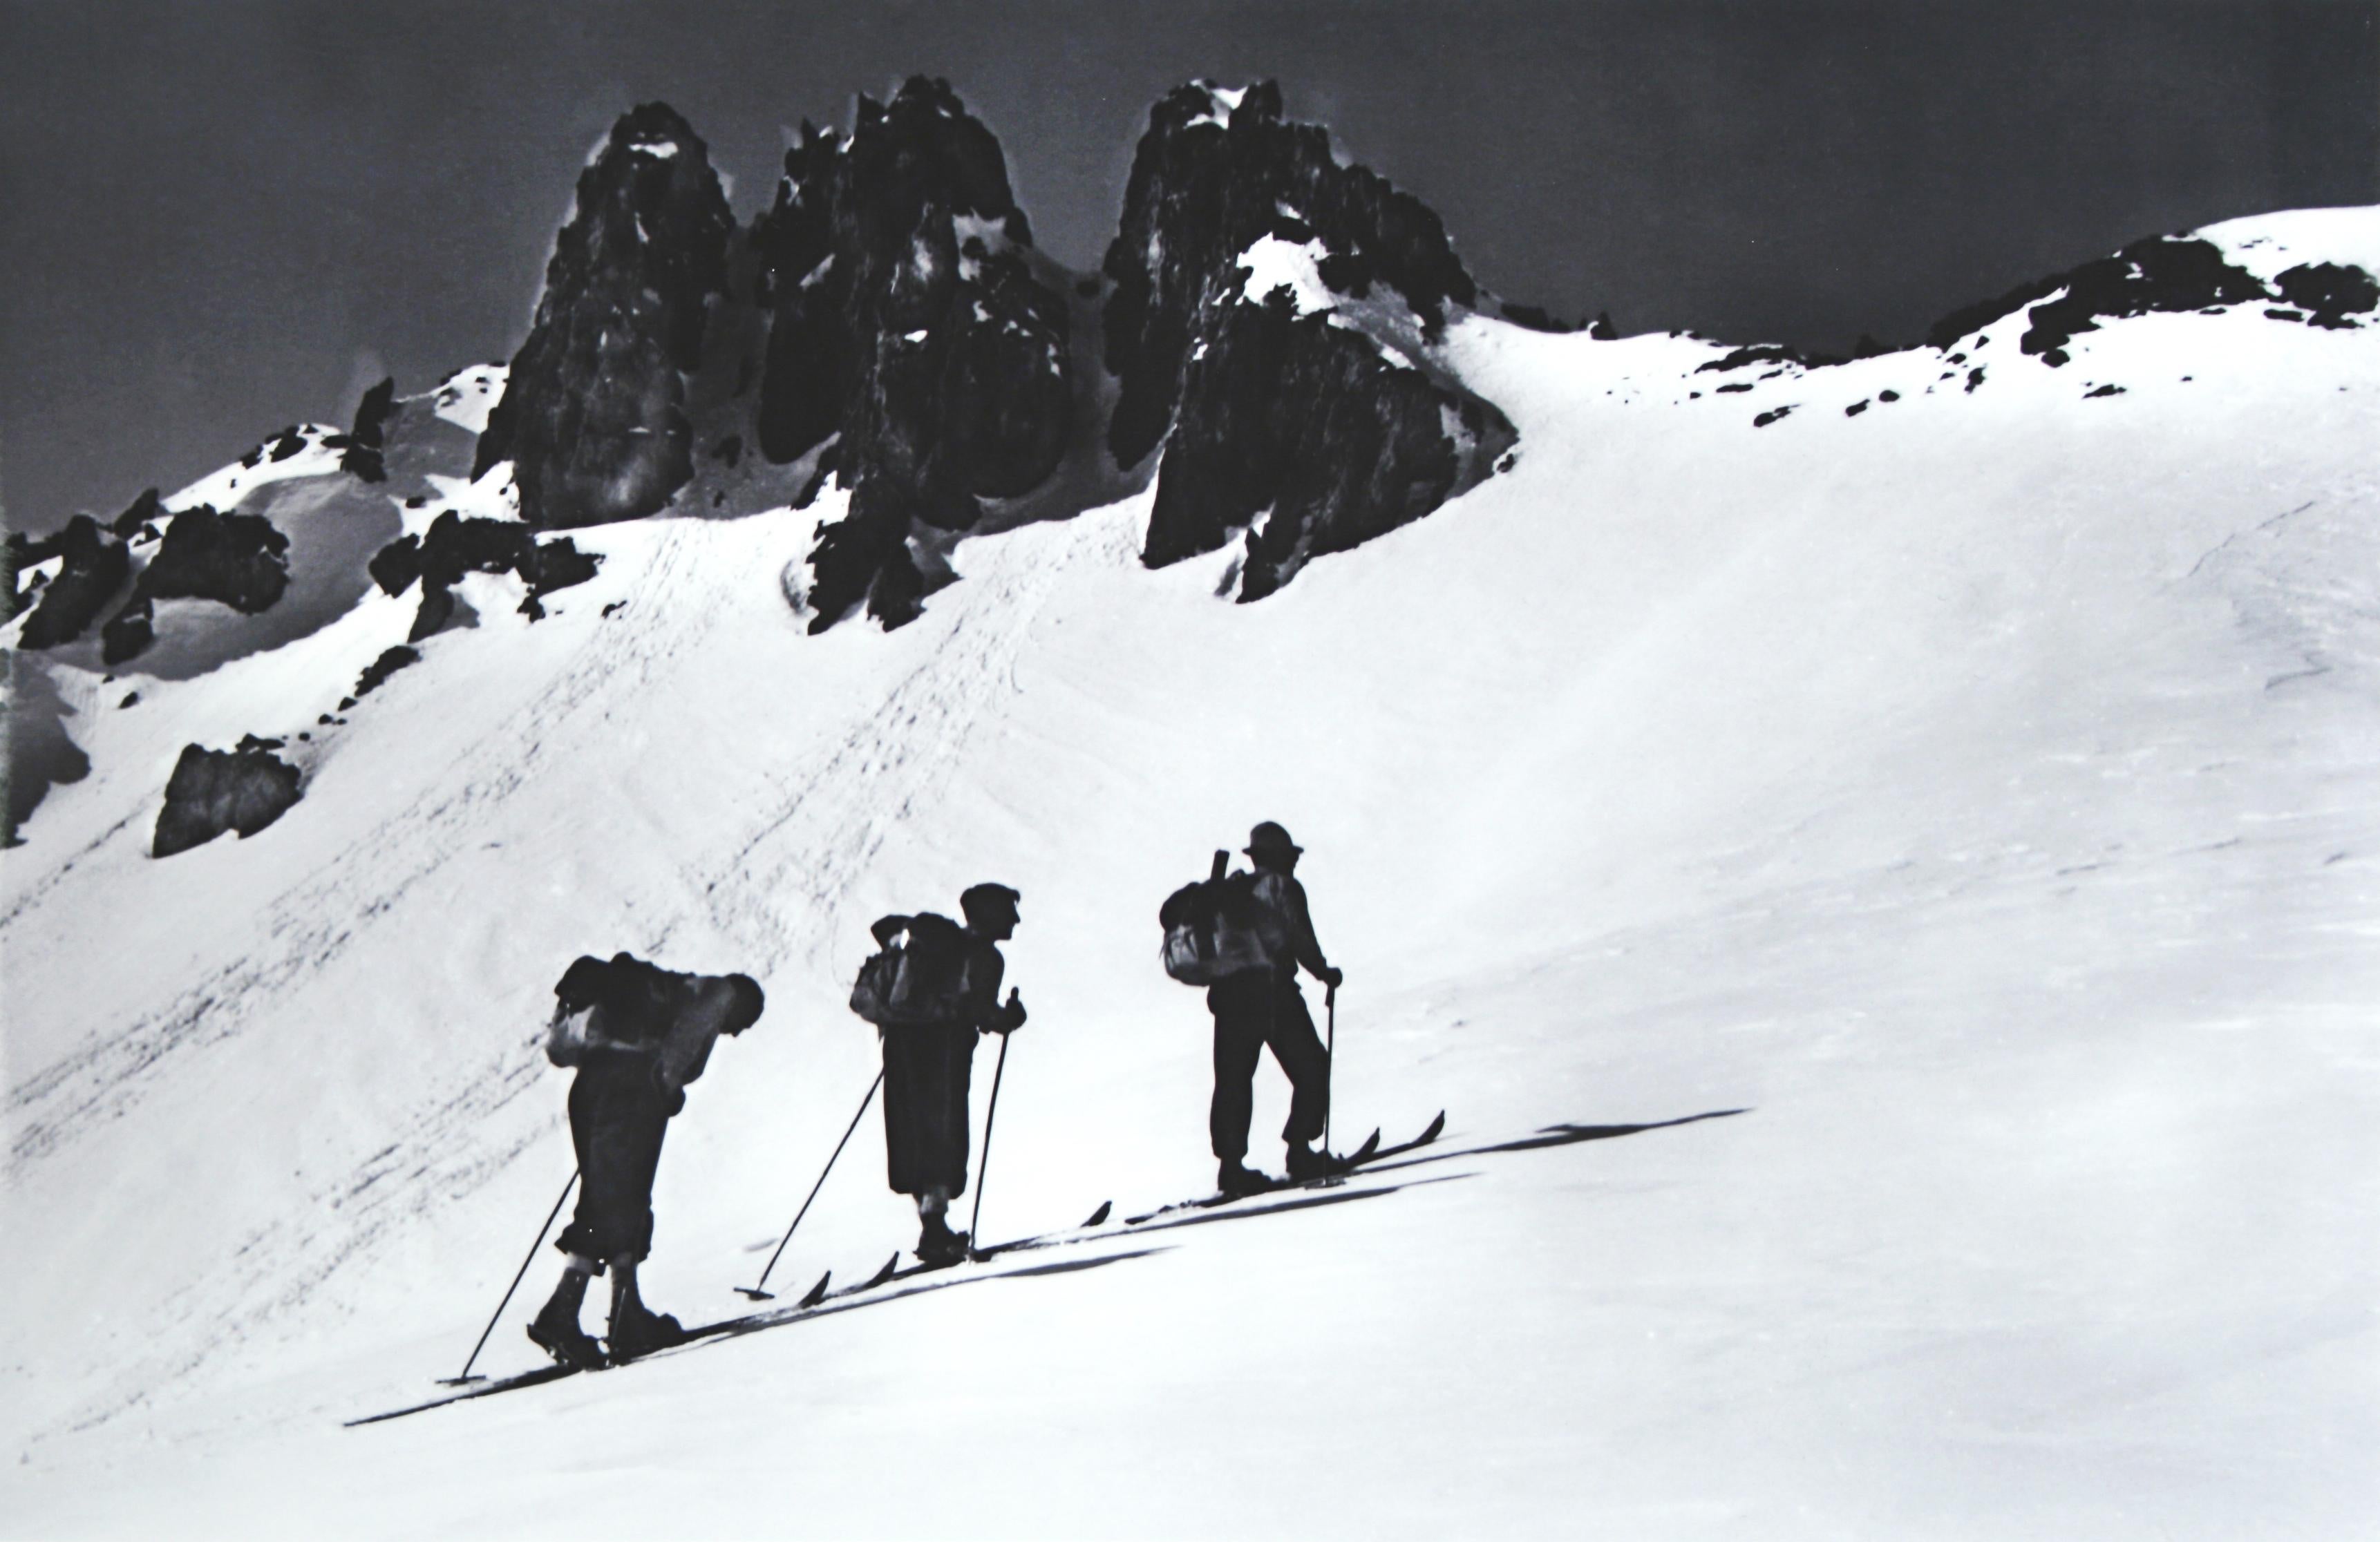 Sporting Art Alpine Ski Photograph, 'Three Peaks' Taken from 1930s Original For Sale